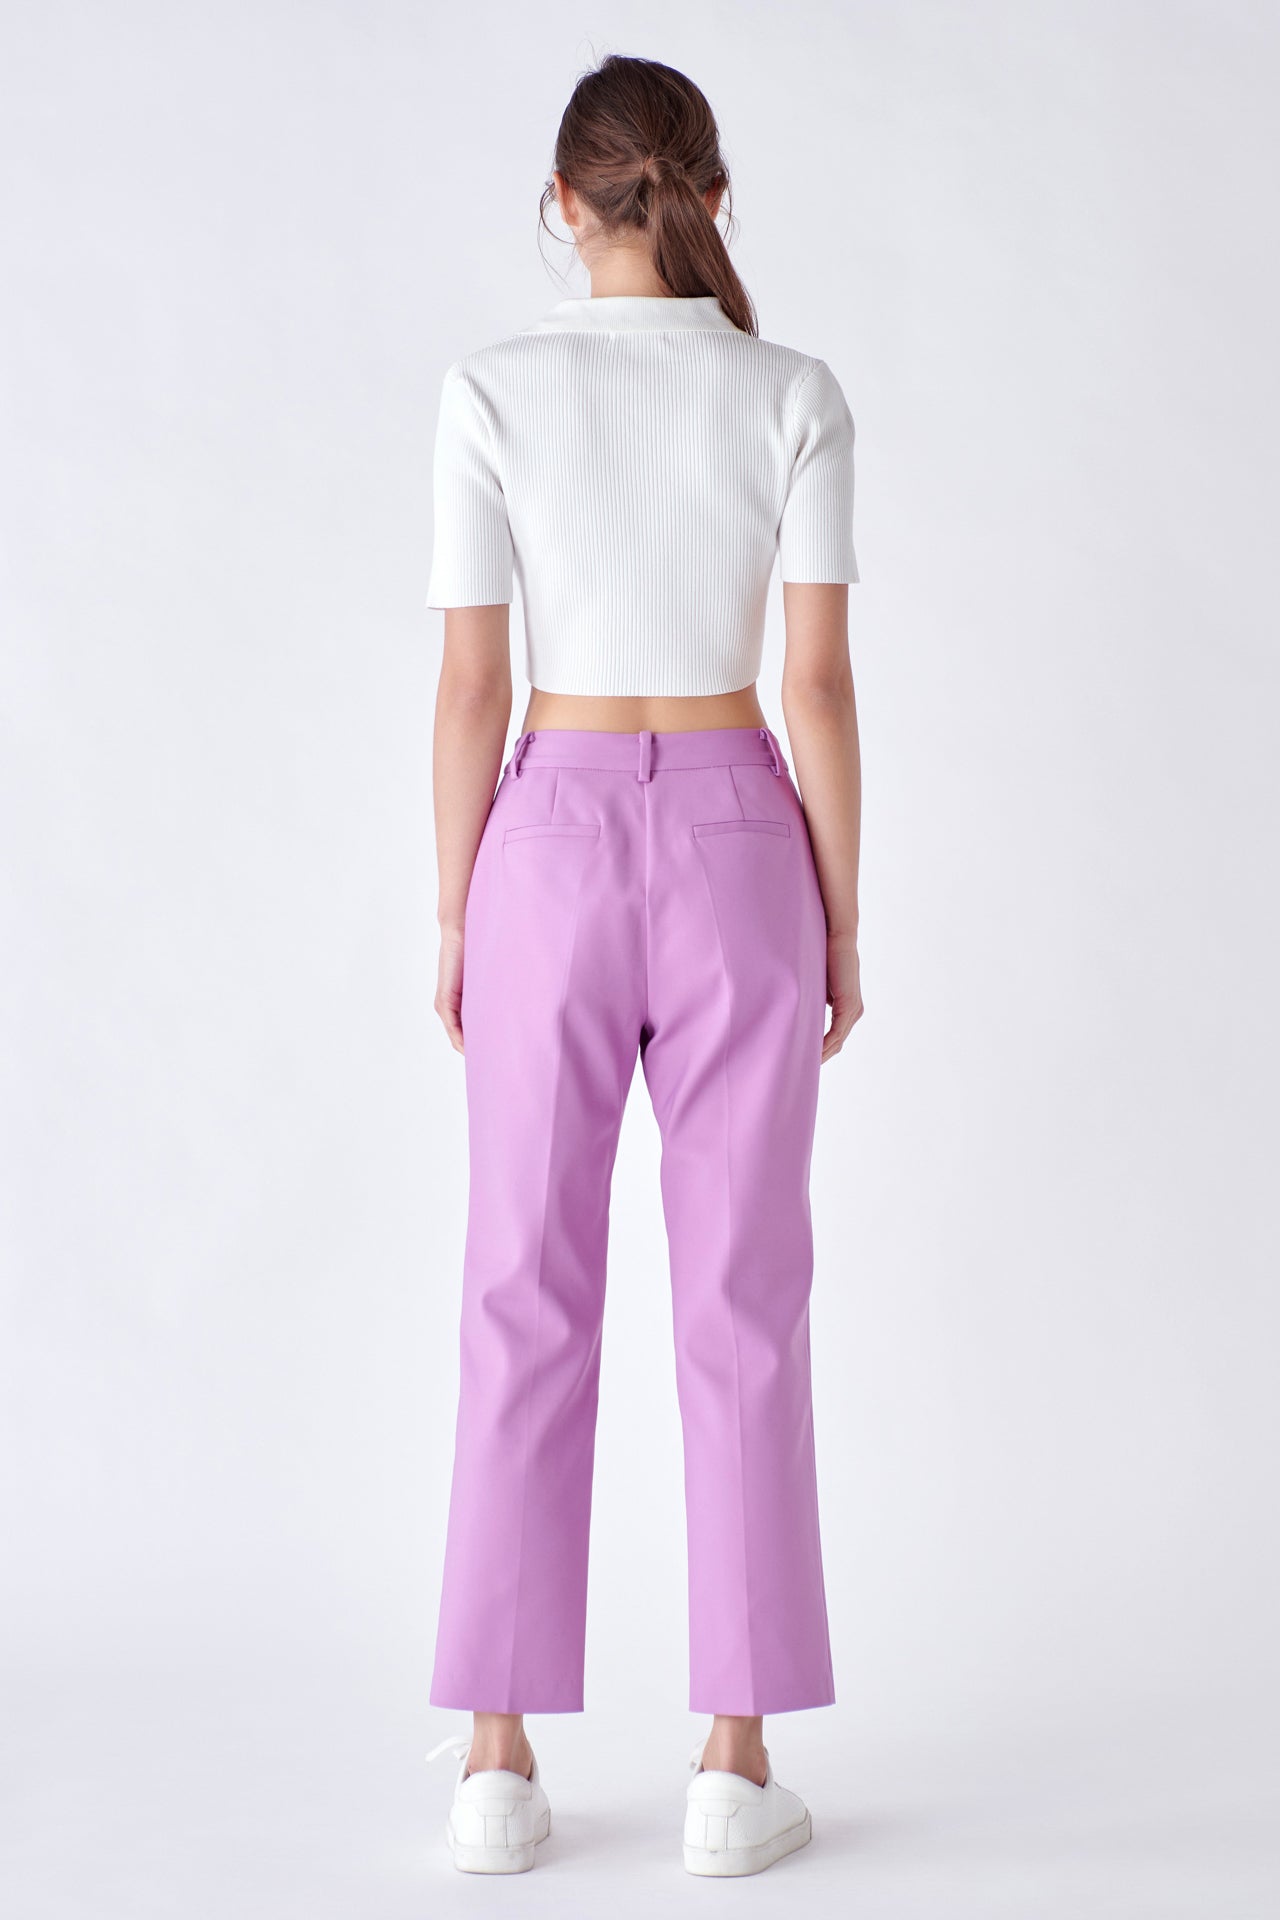 Women's Ladies Slim High Waist Paper Bag Plain Skinny Cigarette Trousers  Pants - Walmart.com